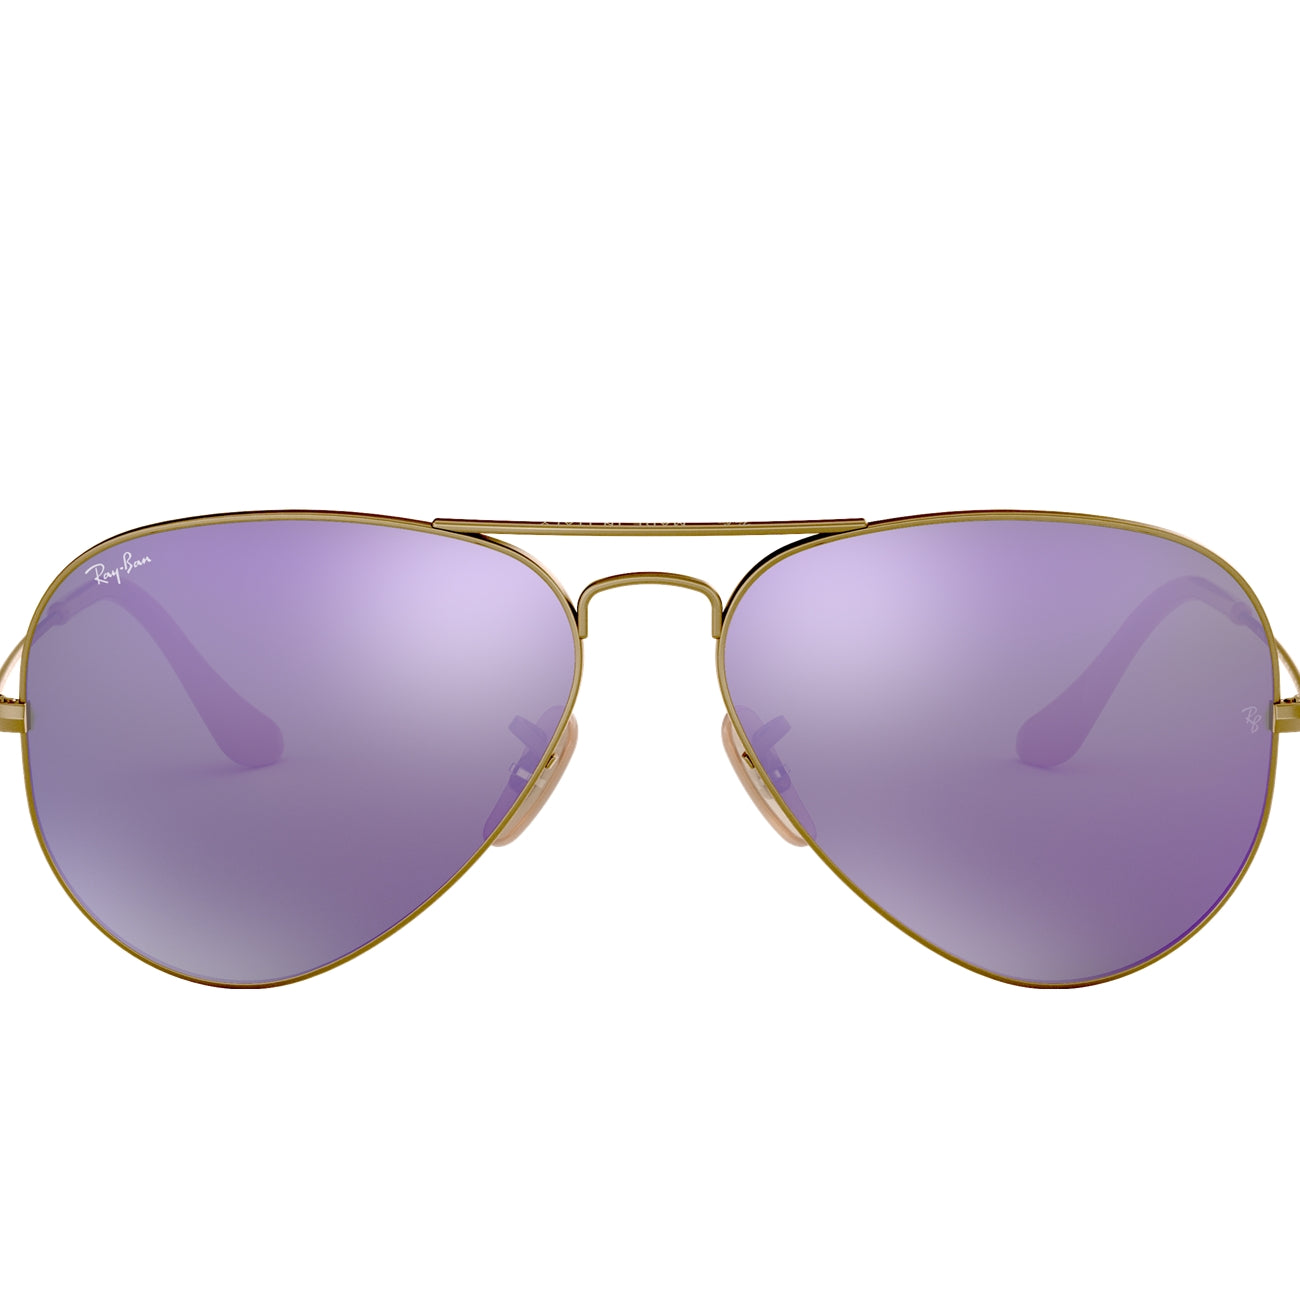 Ray-Ban Aviator Flash Lenses Purple Mirror Mirrored Aviator/Pilot Men's Sunglasses RB3025 167/1M 58